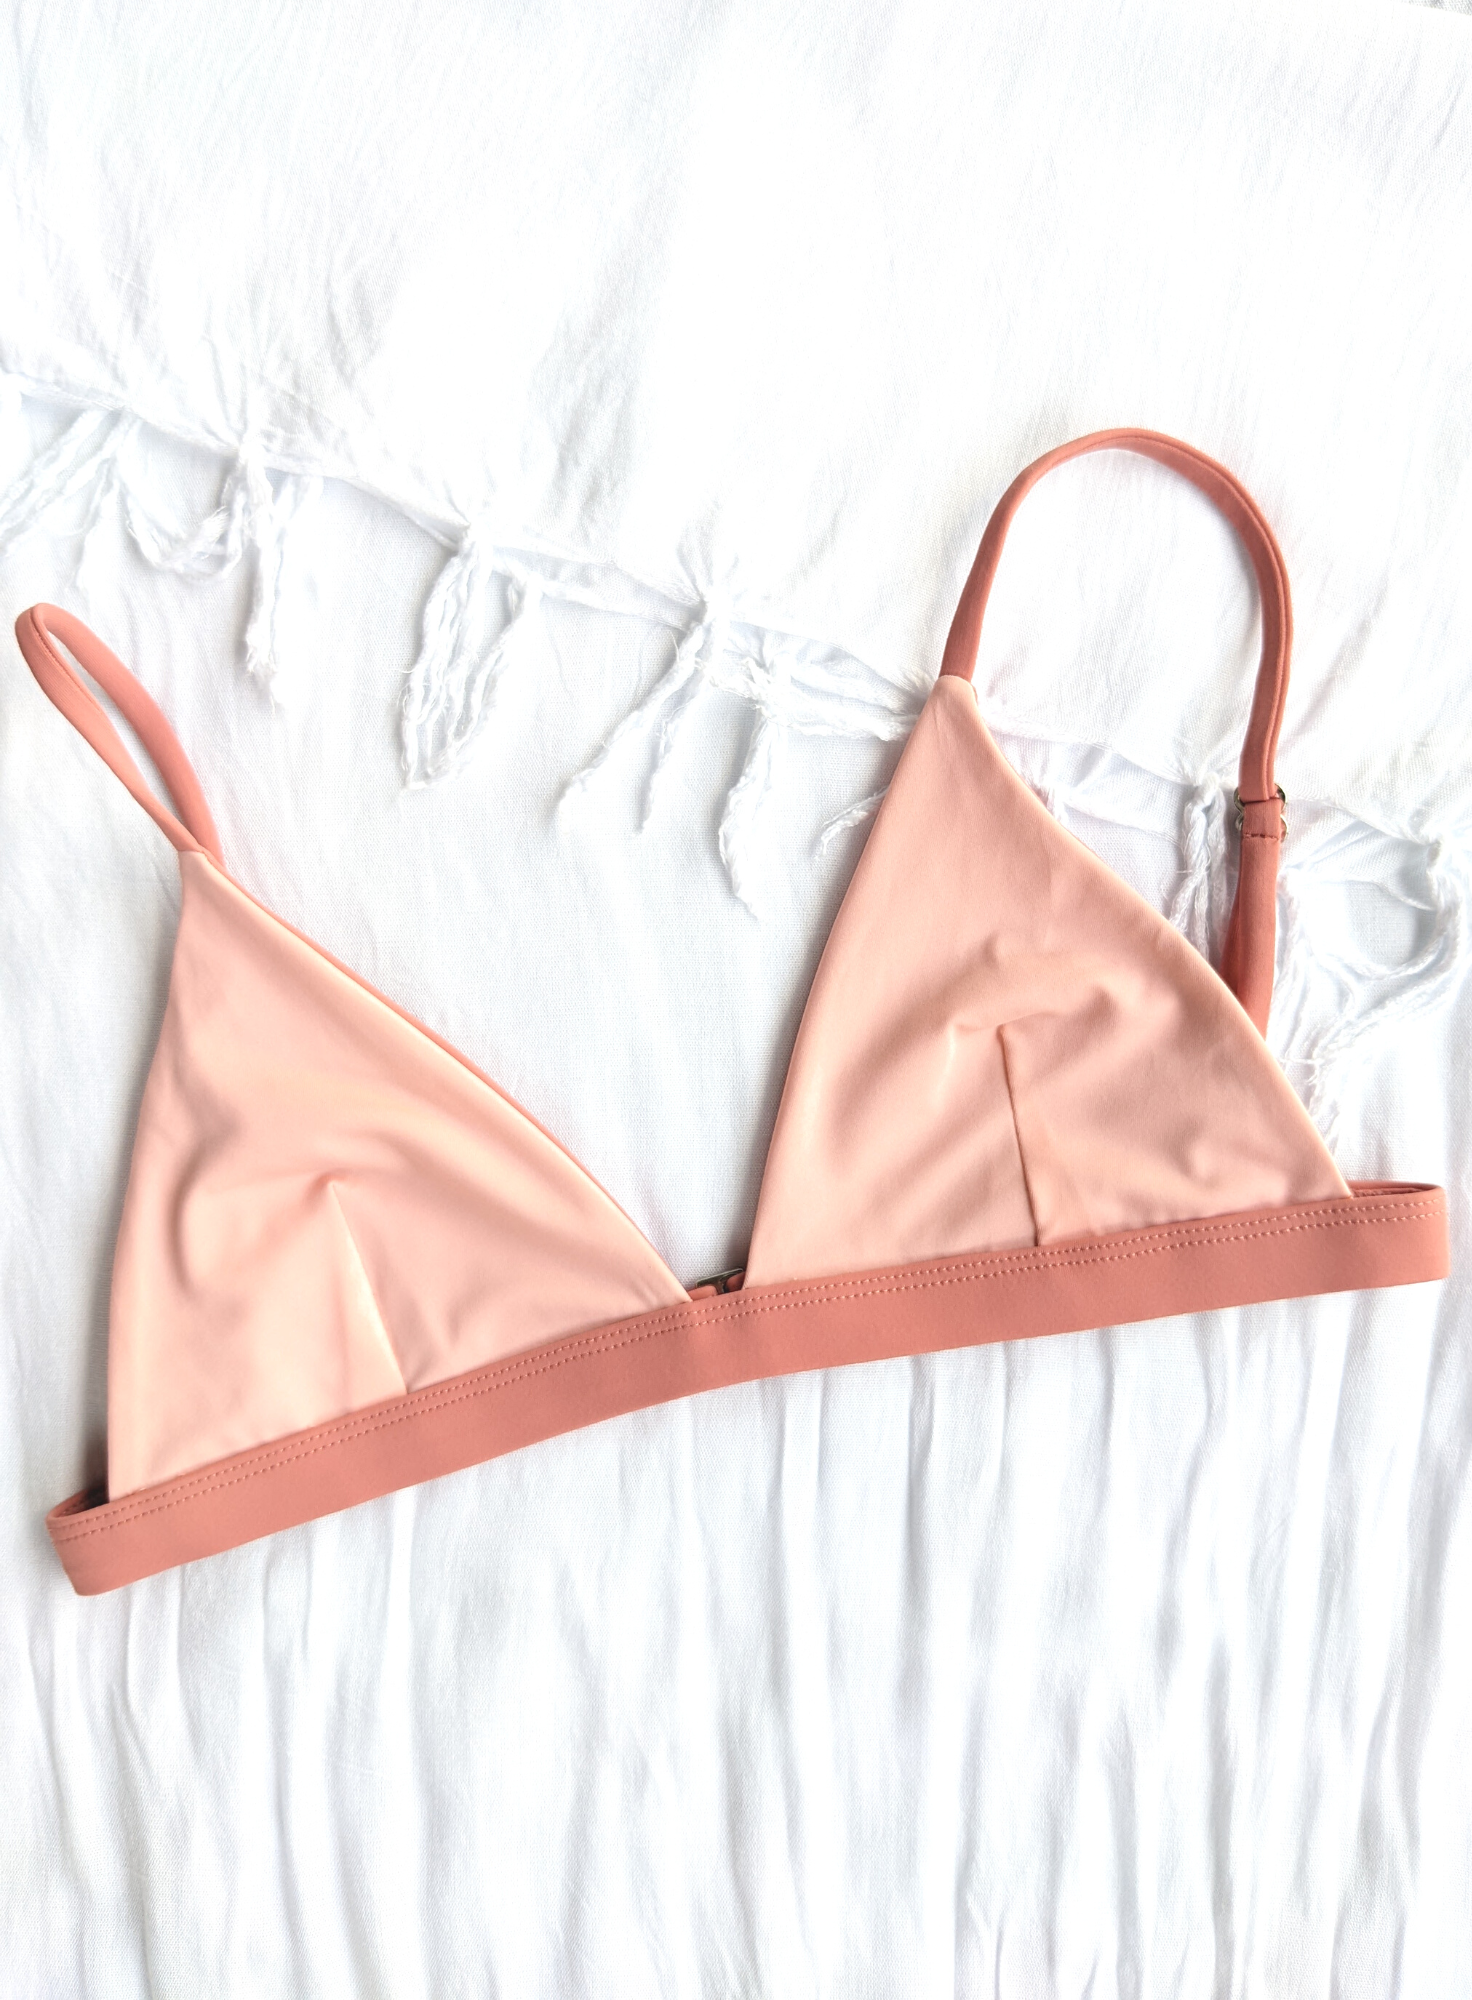 Sustainable swimwear reversible bikini top in blush and peach flat lay peach side